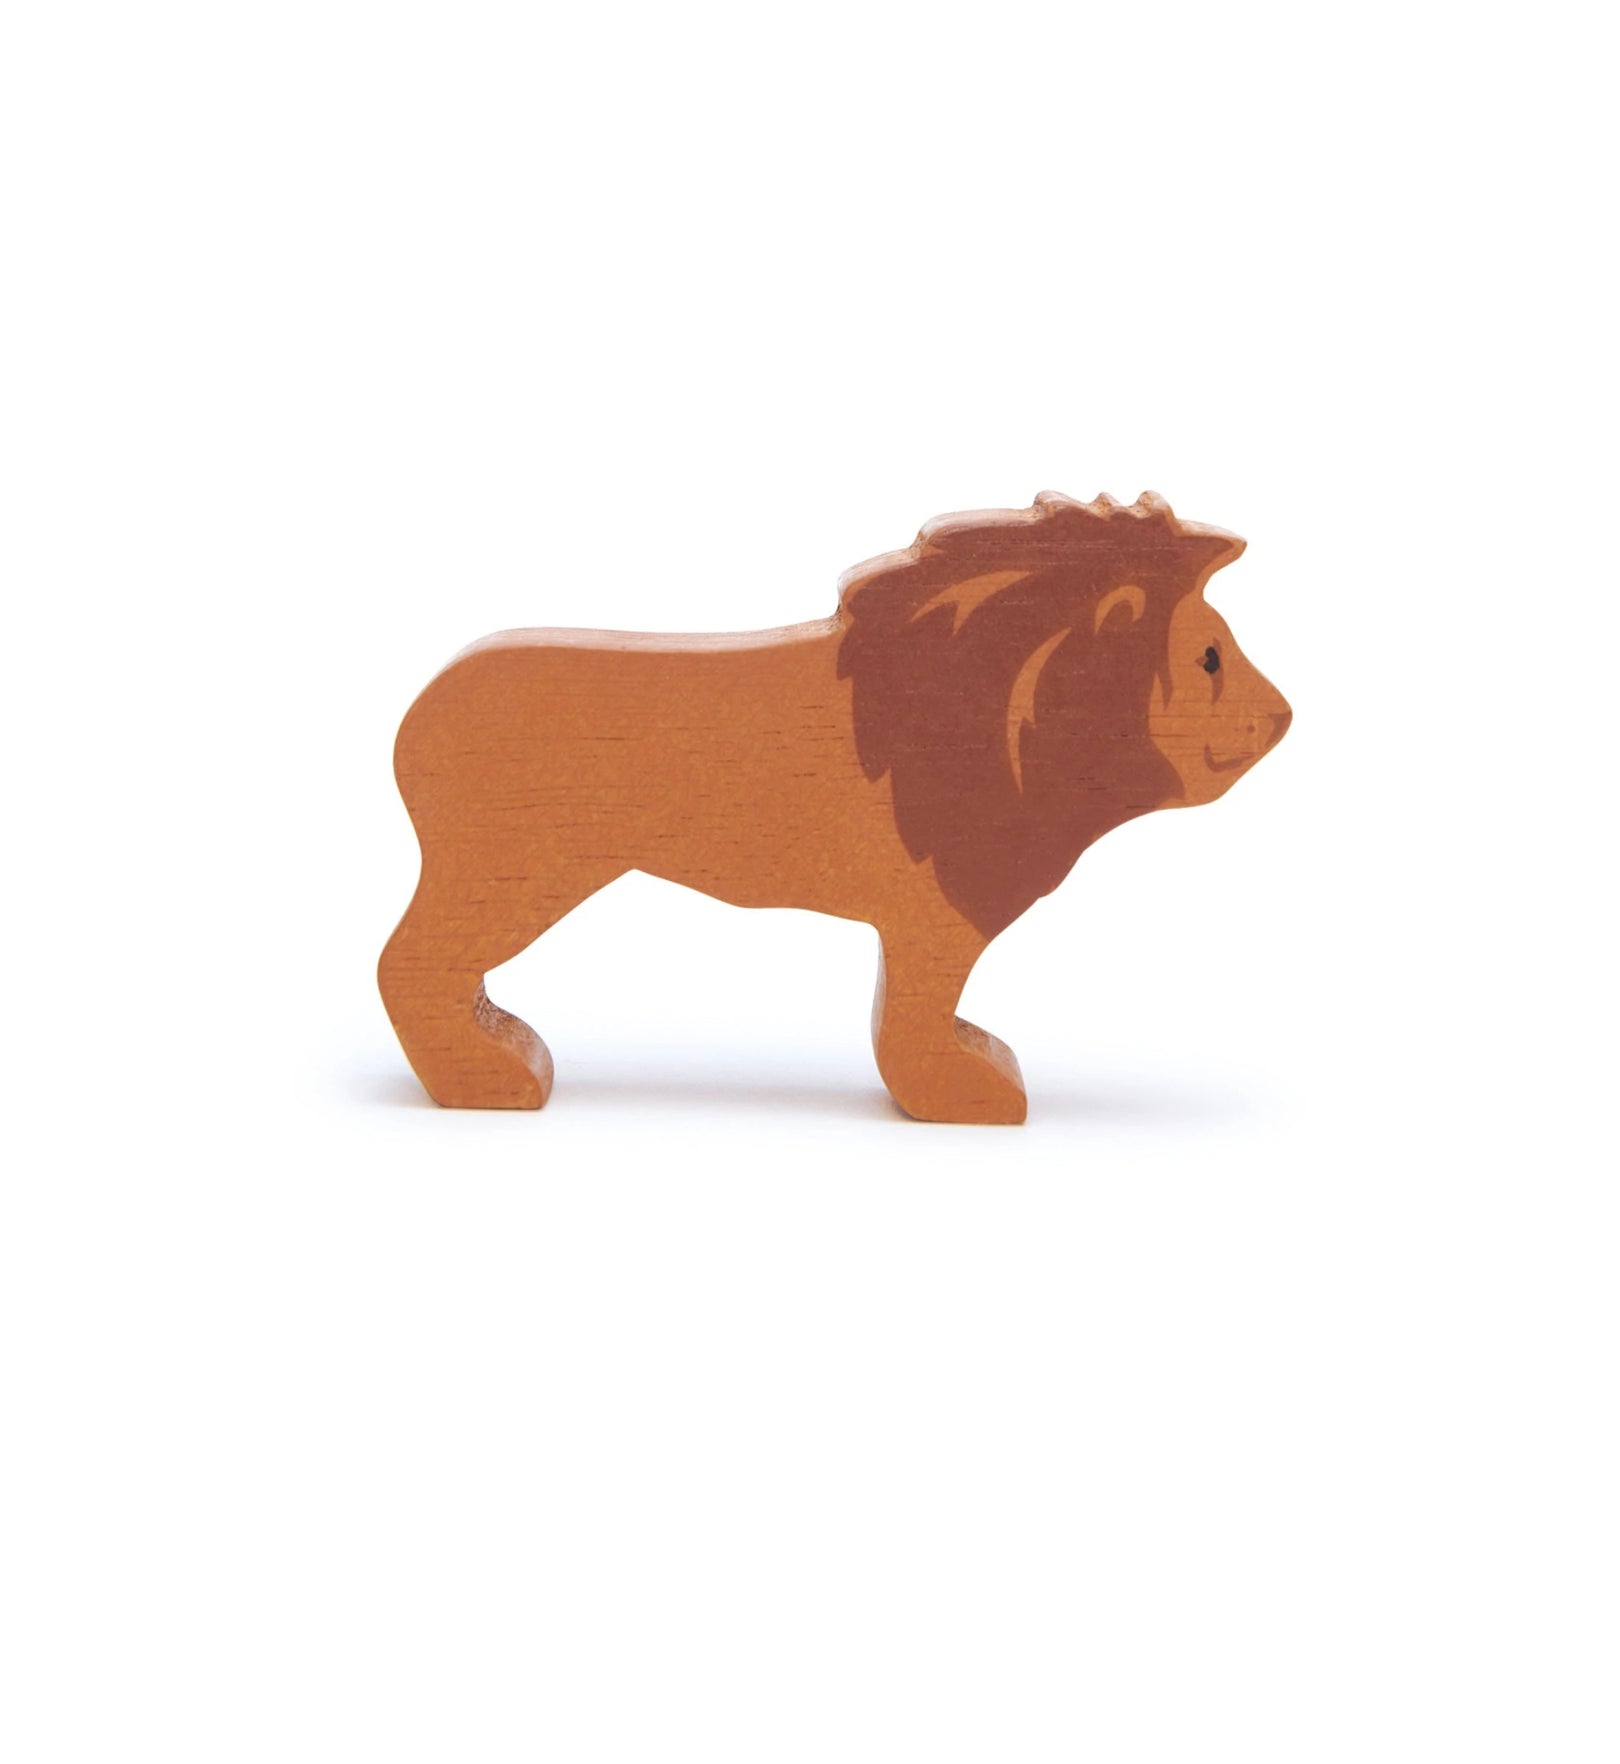 Tender Leaf Toys Safari Animals Lion Wooden Toy